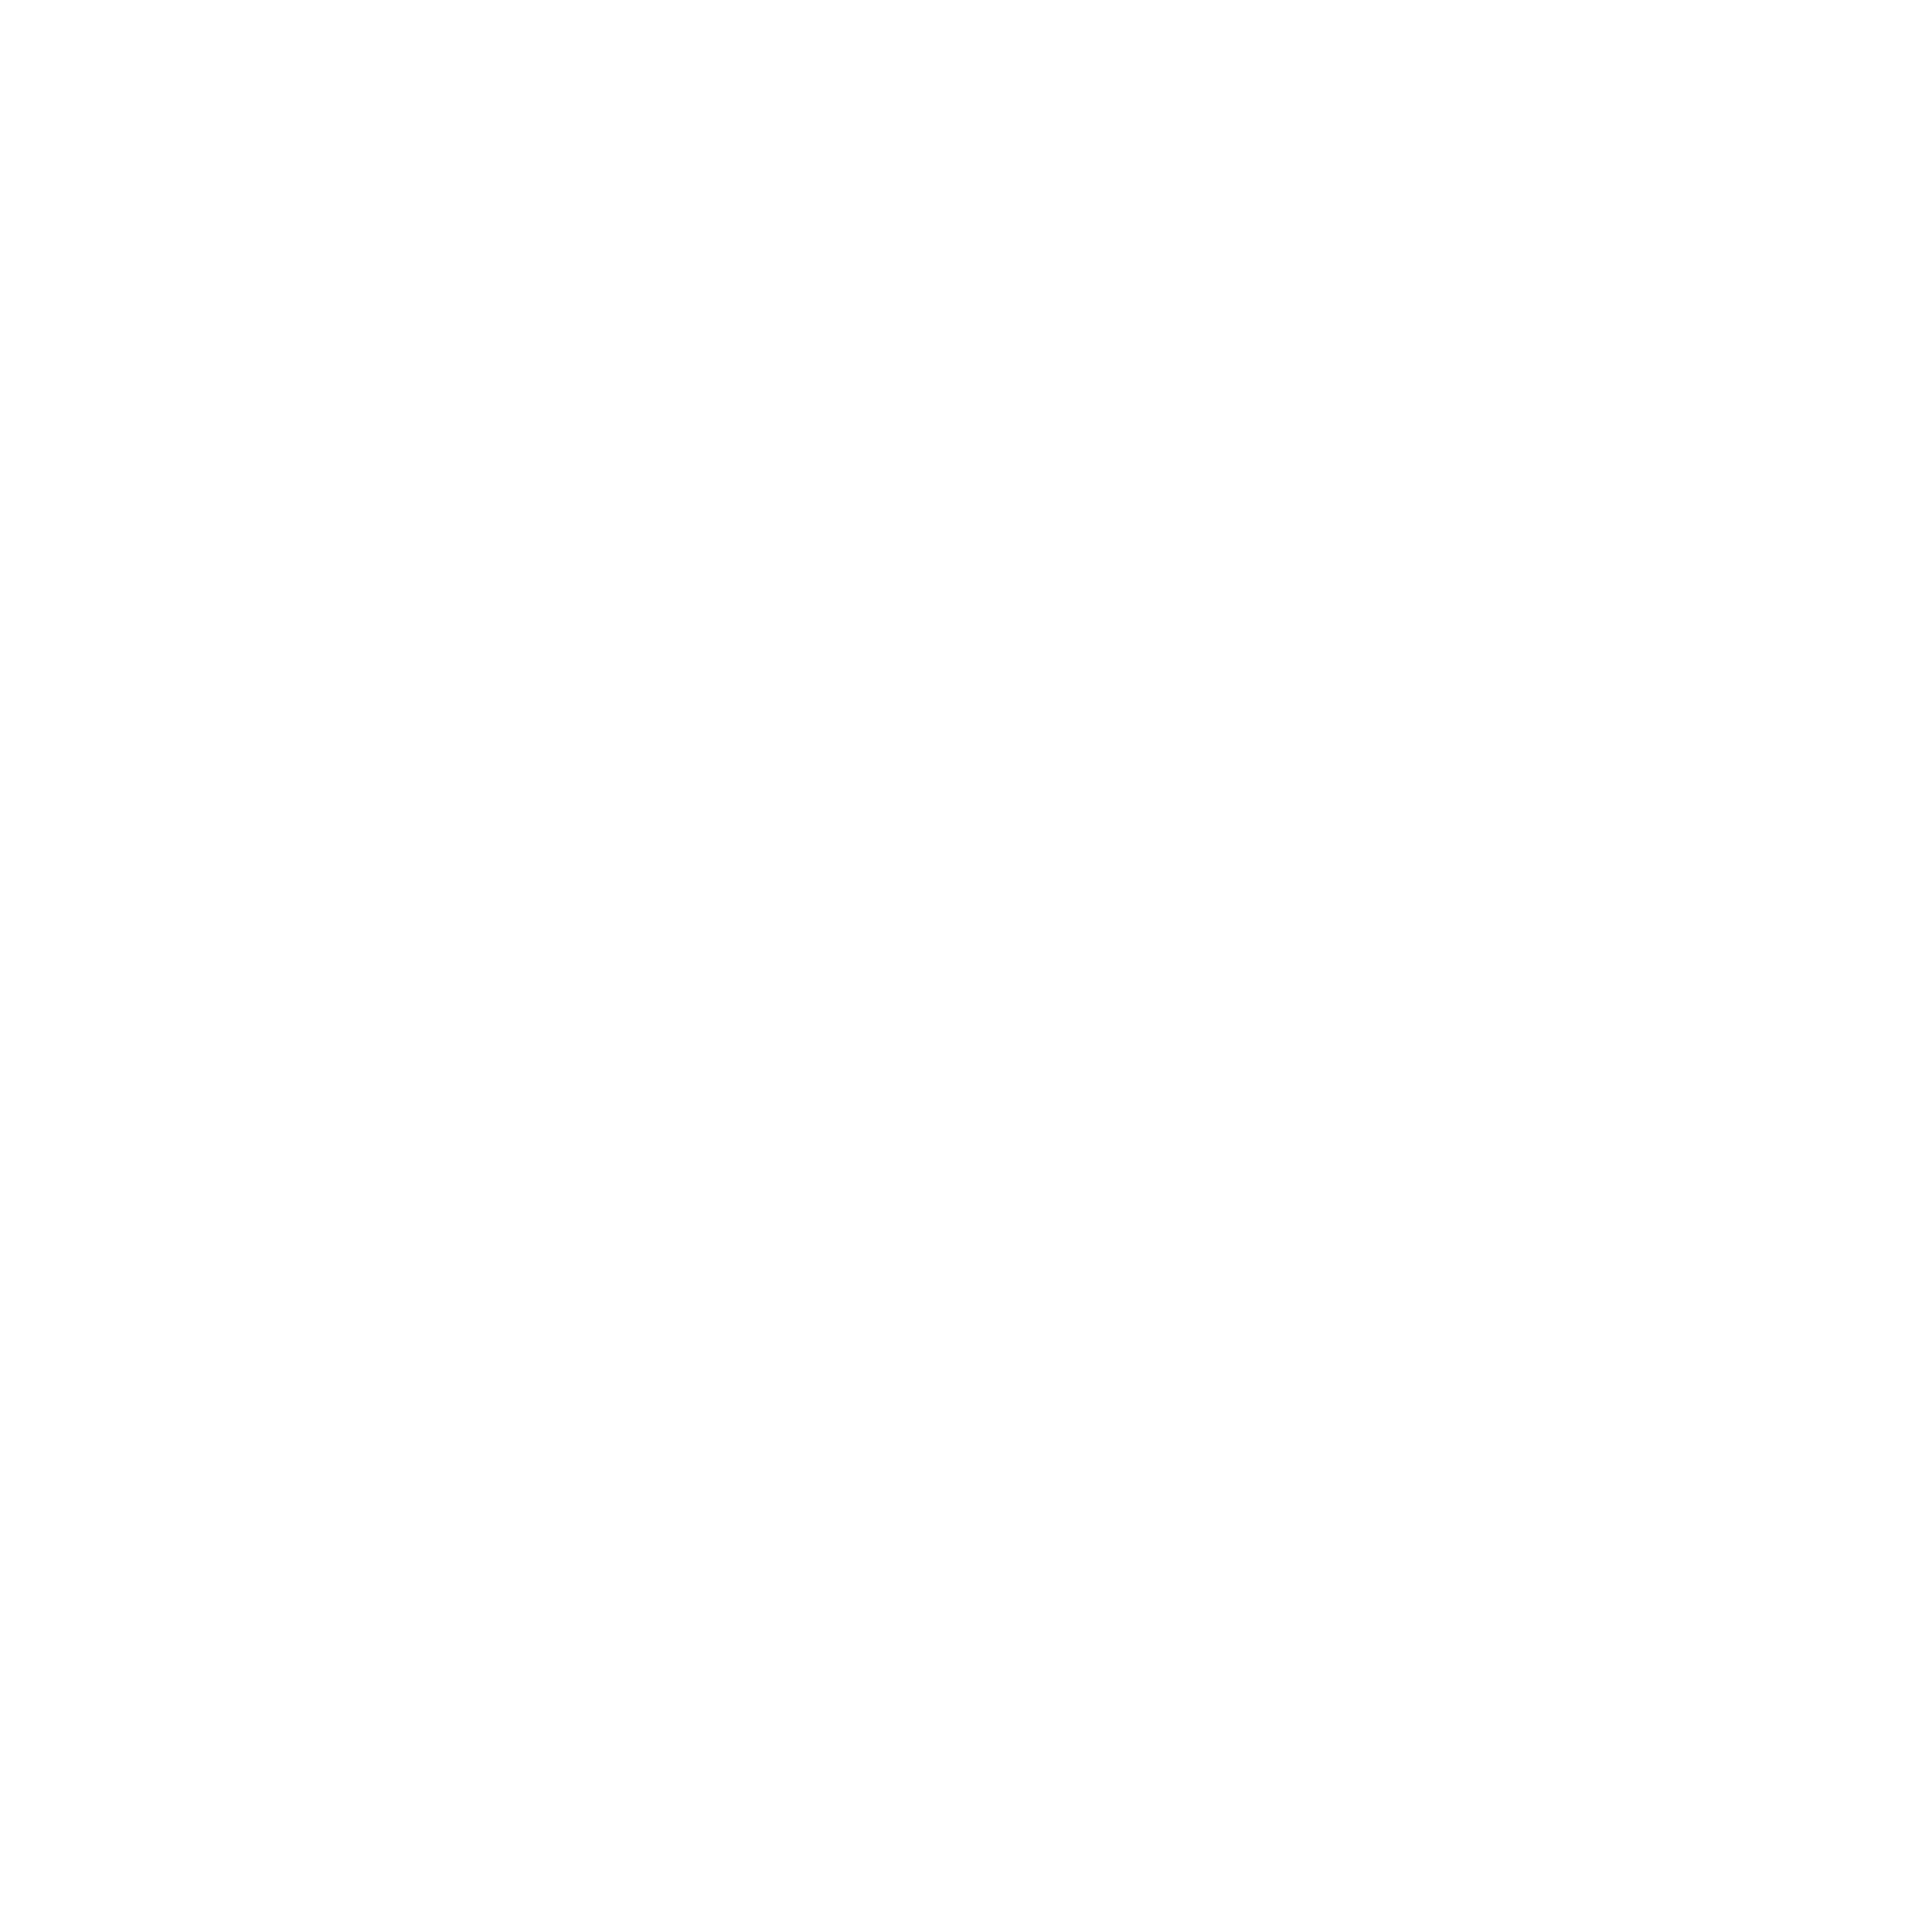 PRMIA Logo - PRMIA Logo PNG Transparent & SVG Vector - Freebie Supply